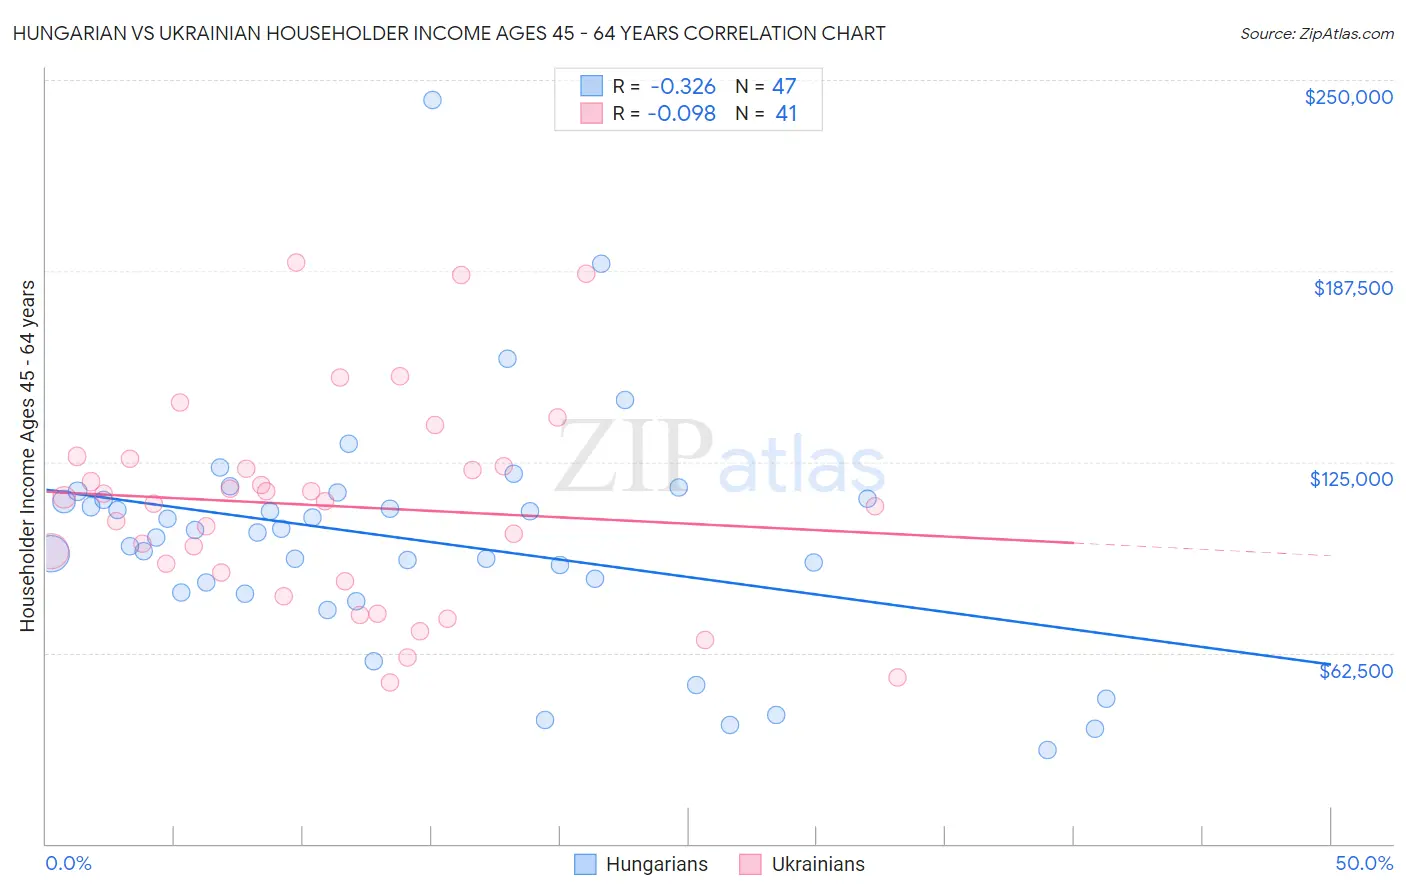 Hungarian vs Ukrainian Householder Income Ages 45 - 64 years